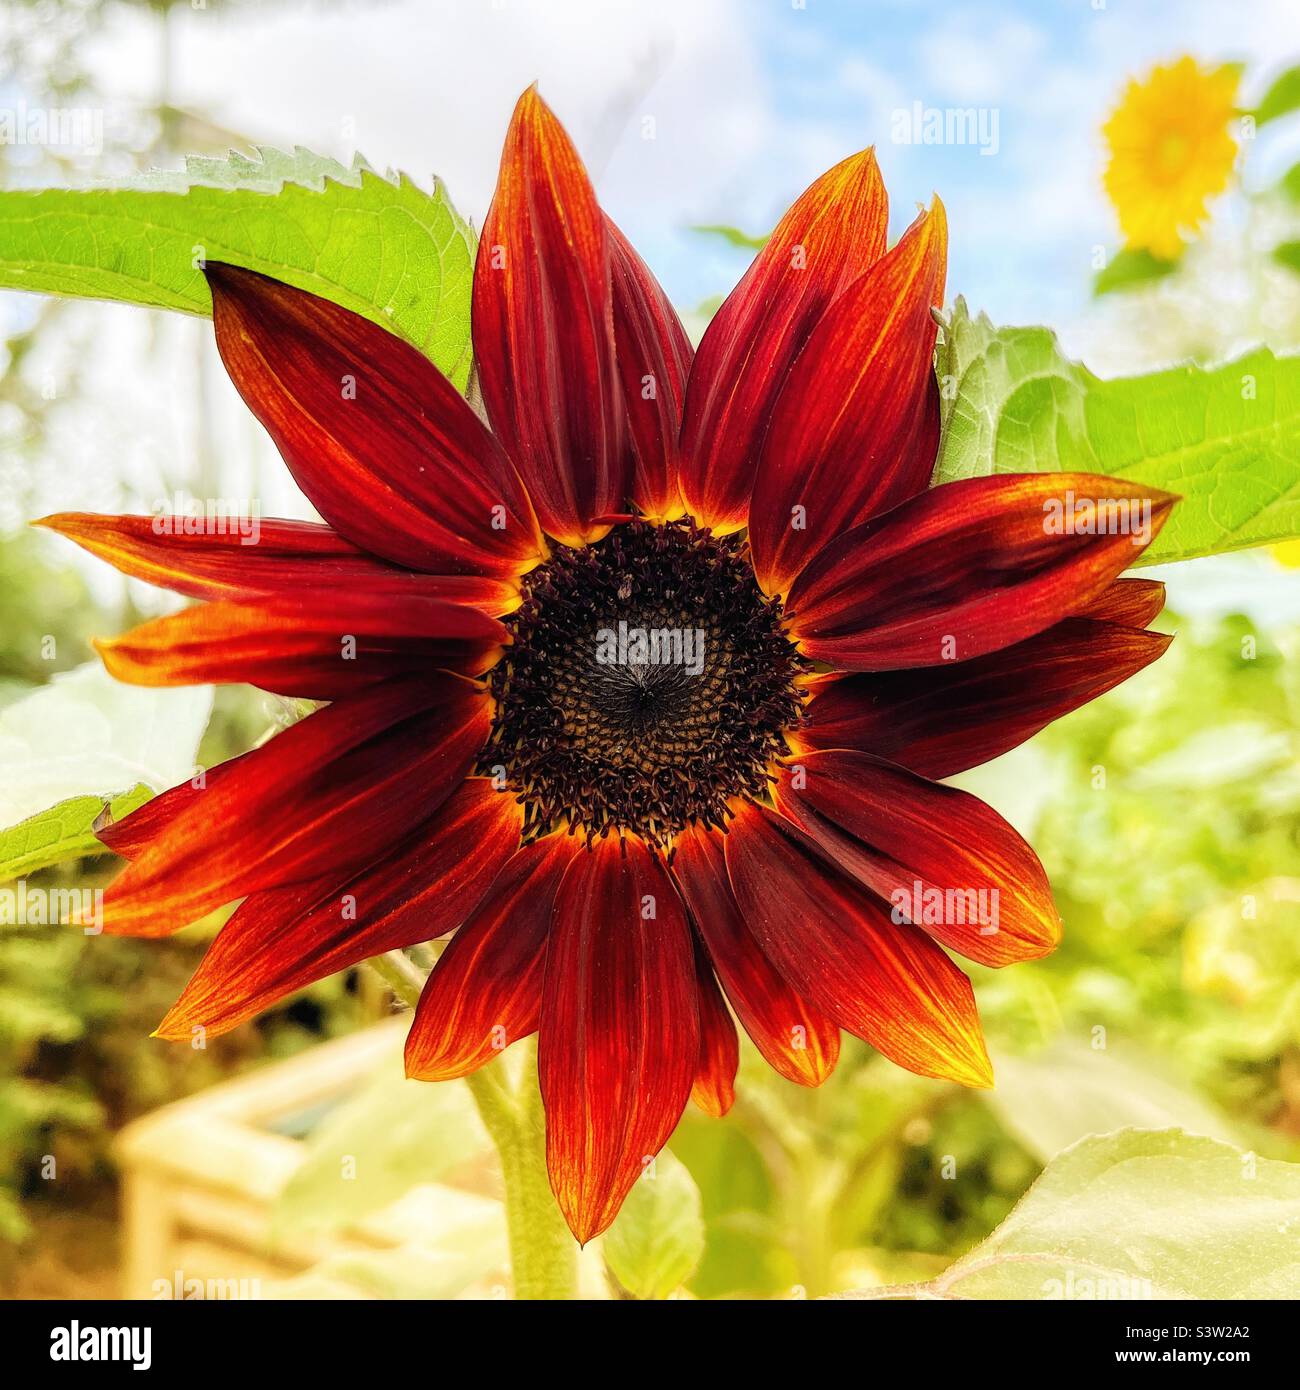 Red sunflower Stock Photo